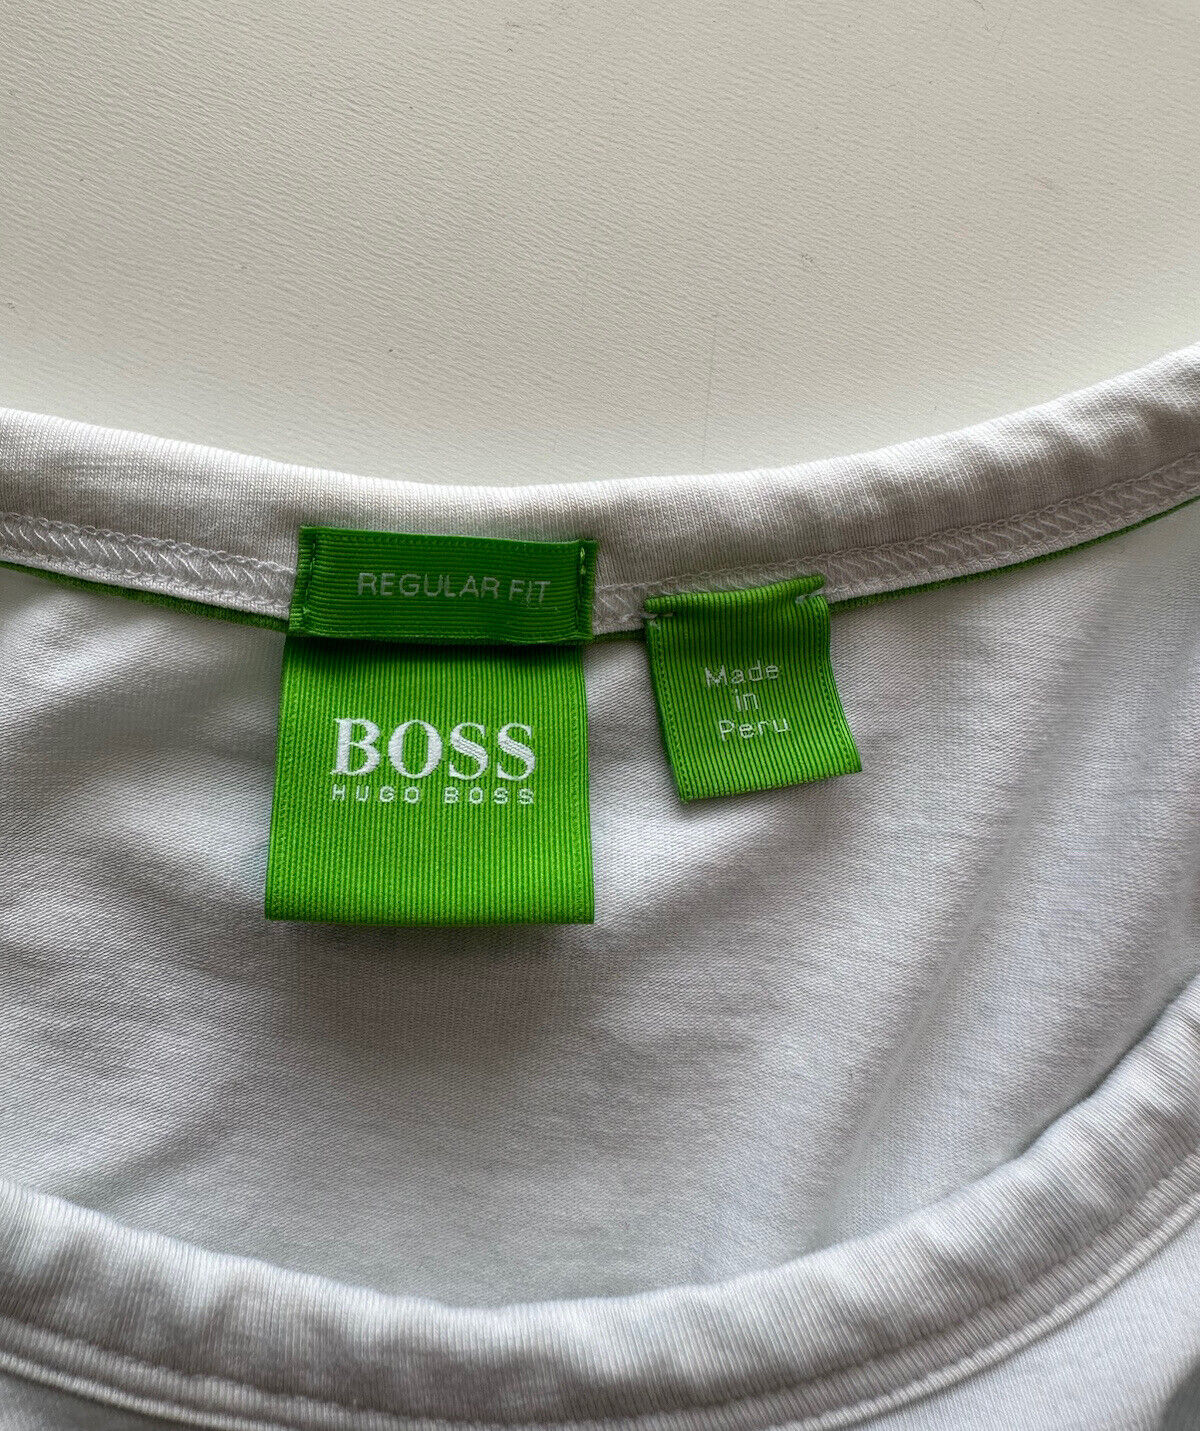 Белая футболка с короткими рукавами и логотипом Boss Hugo Boss Green Label L (размер среднего размера)